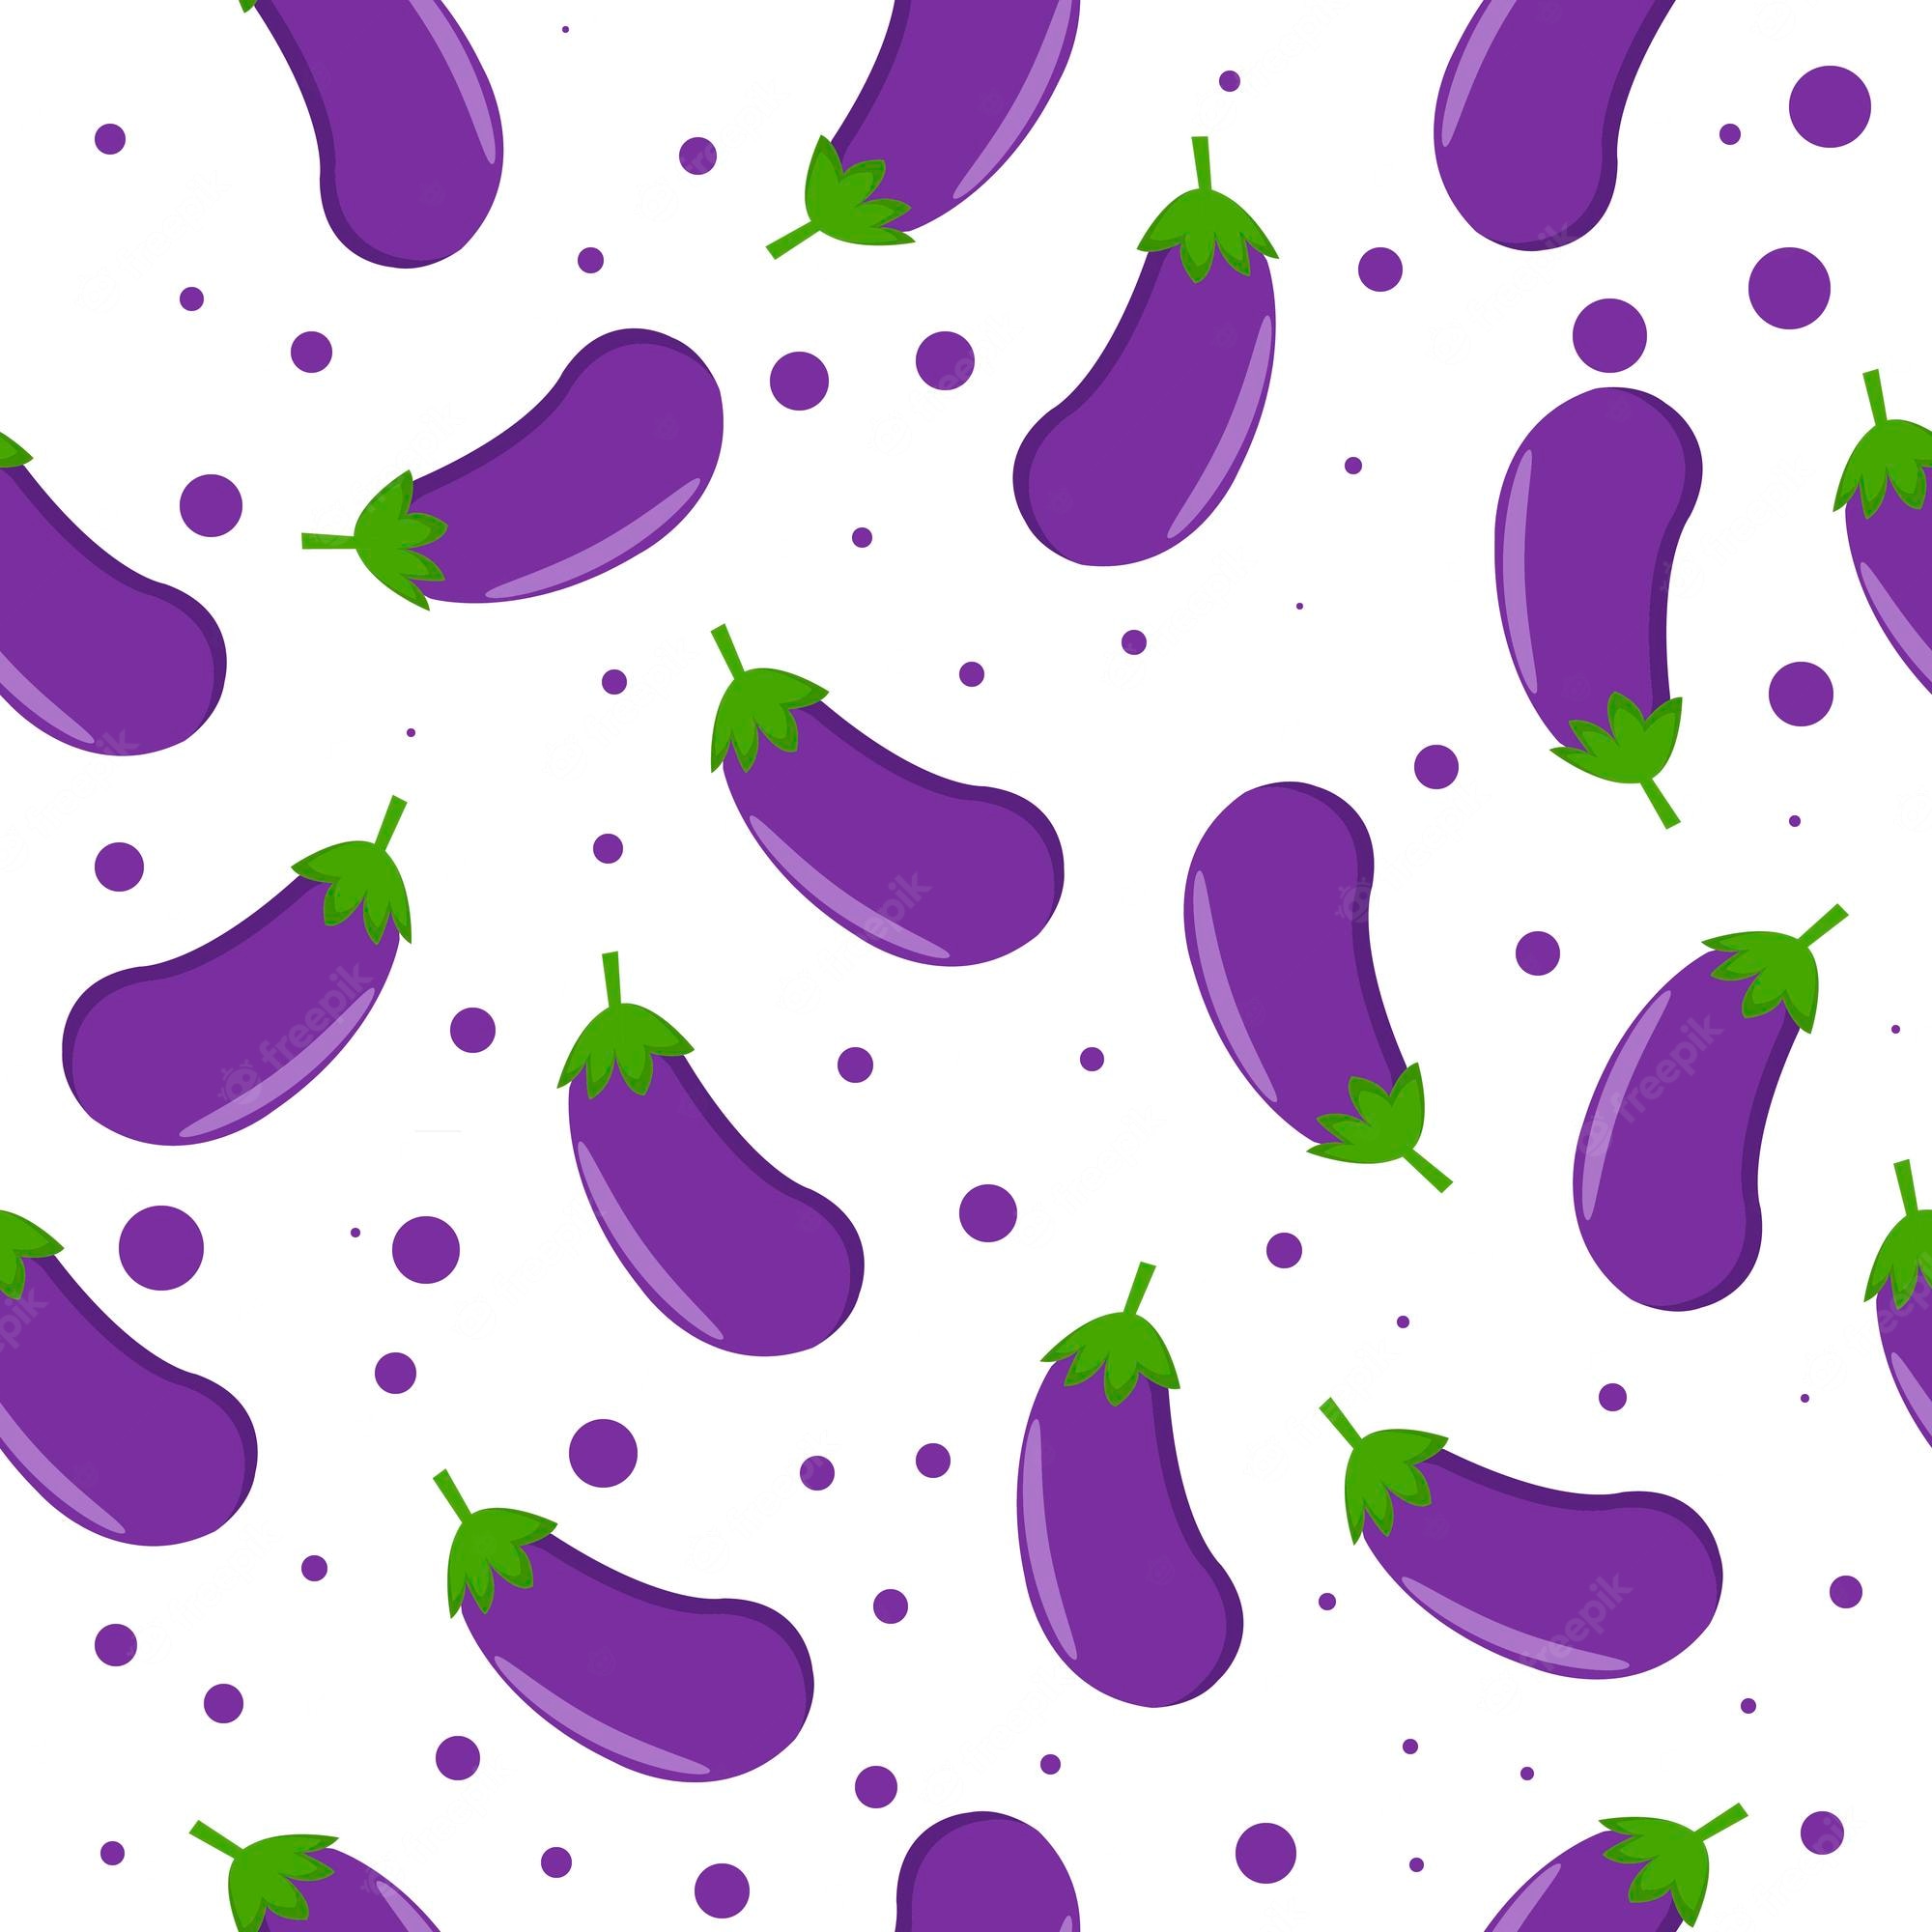 Eggplant Wallpapers